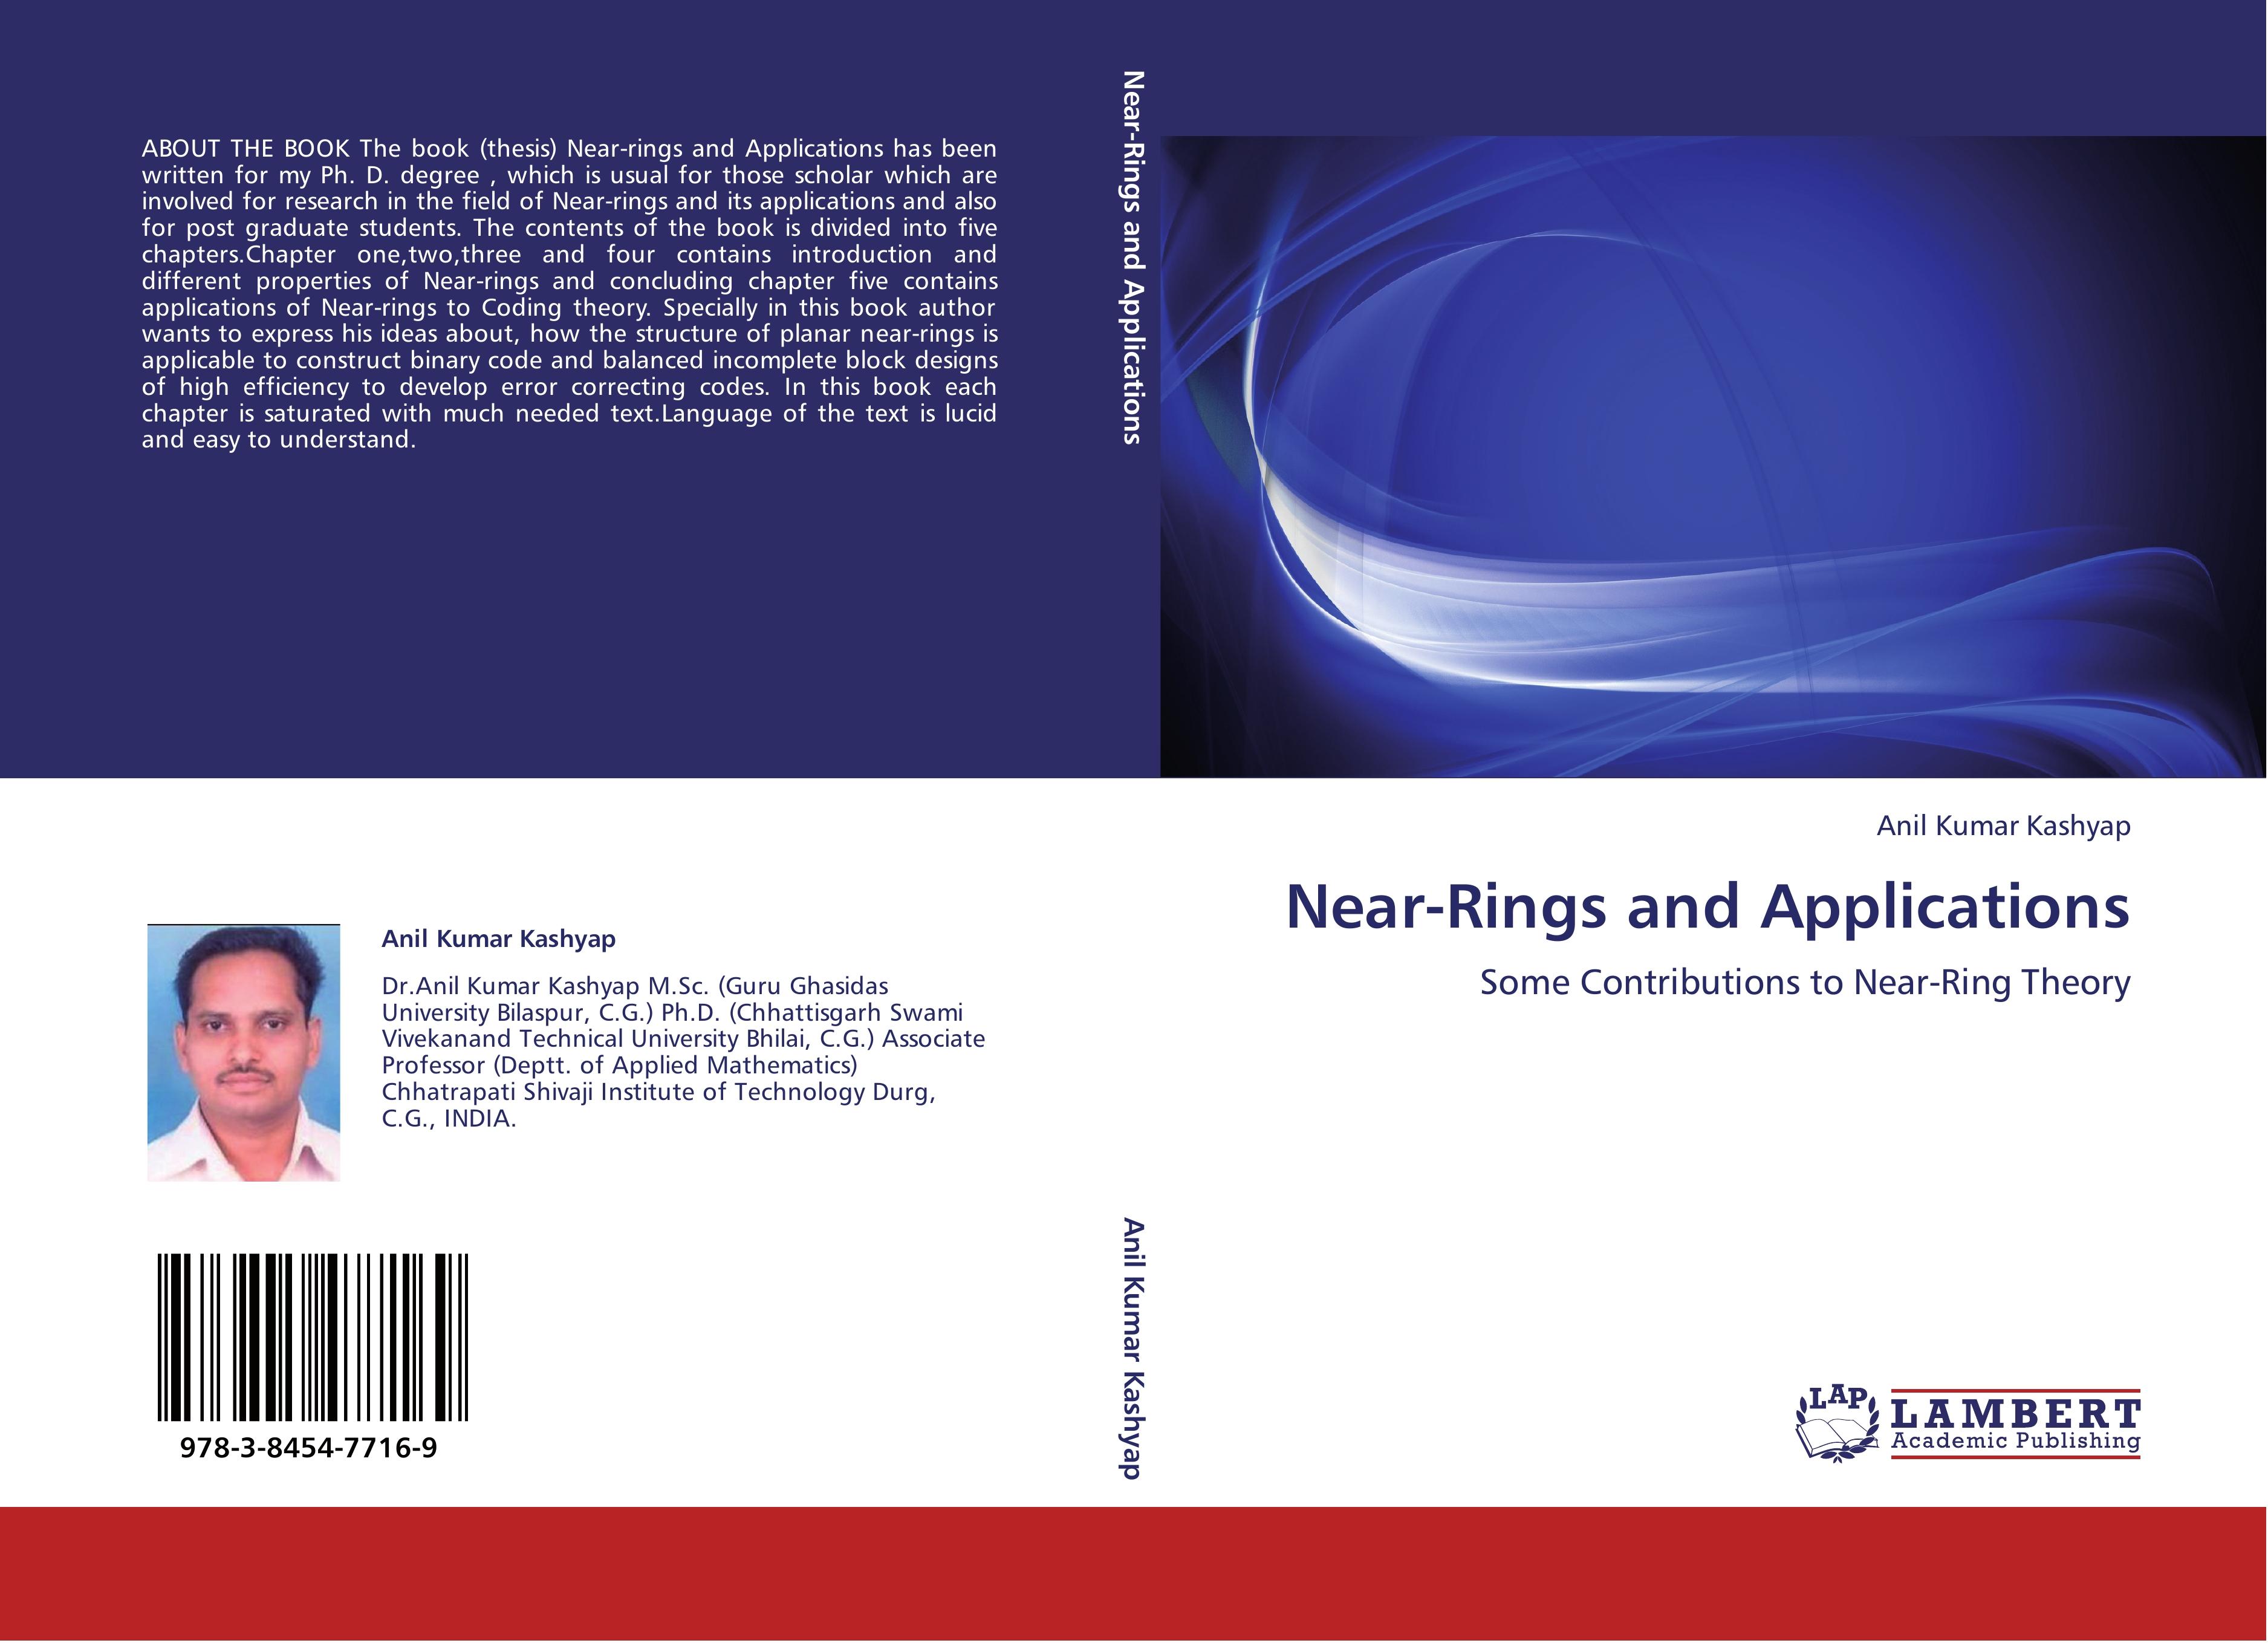 Near-Rings and Applications - Anil Kumar Kashyap